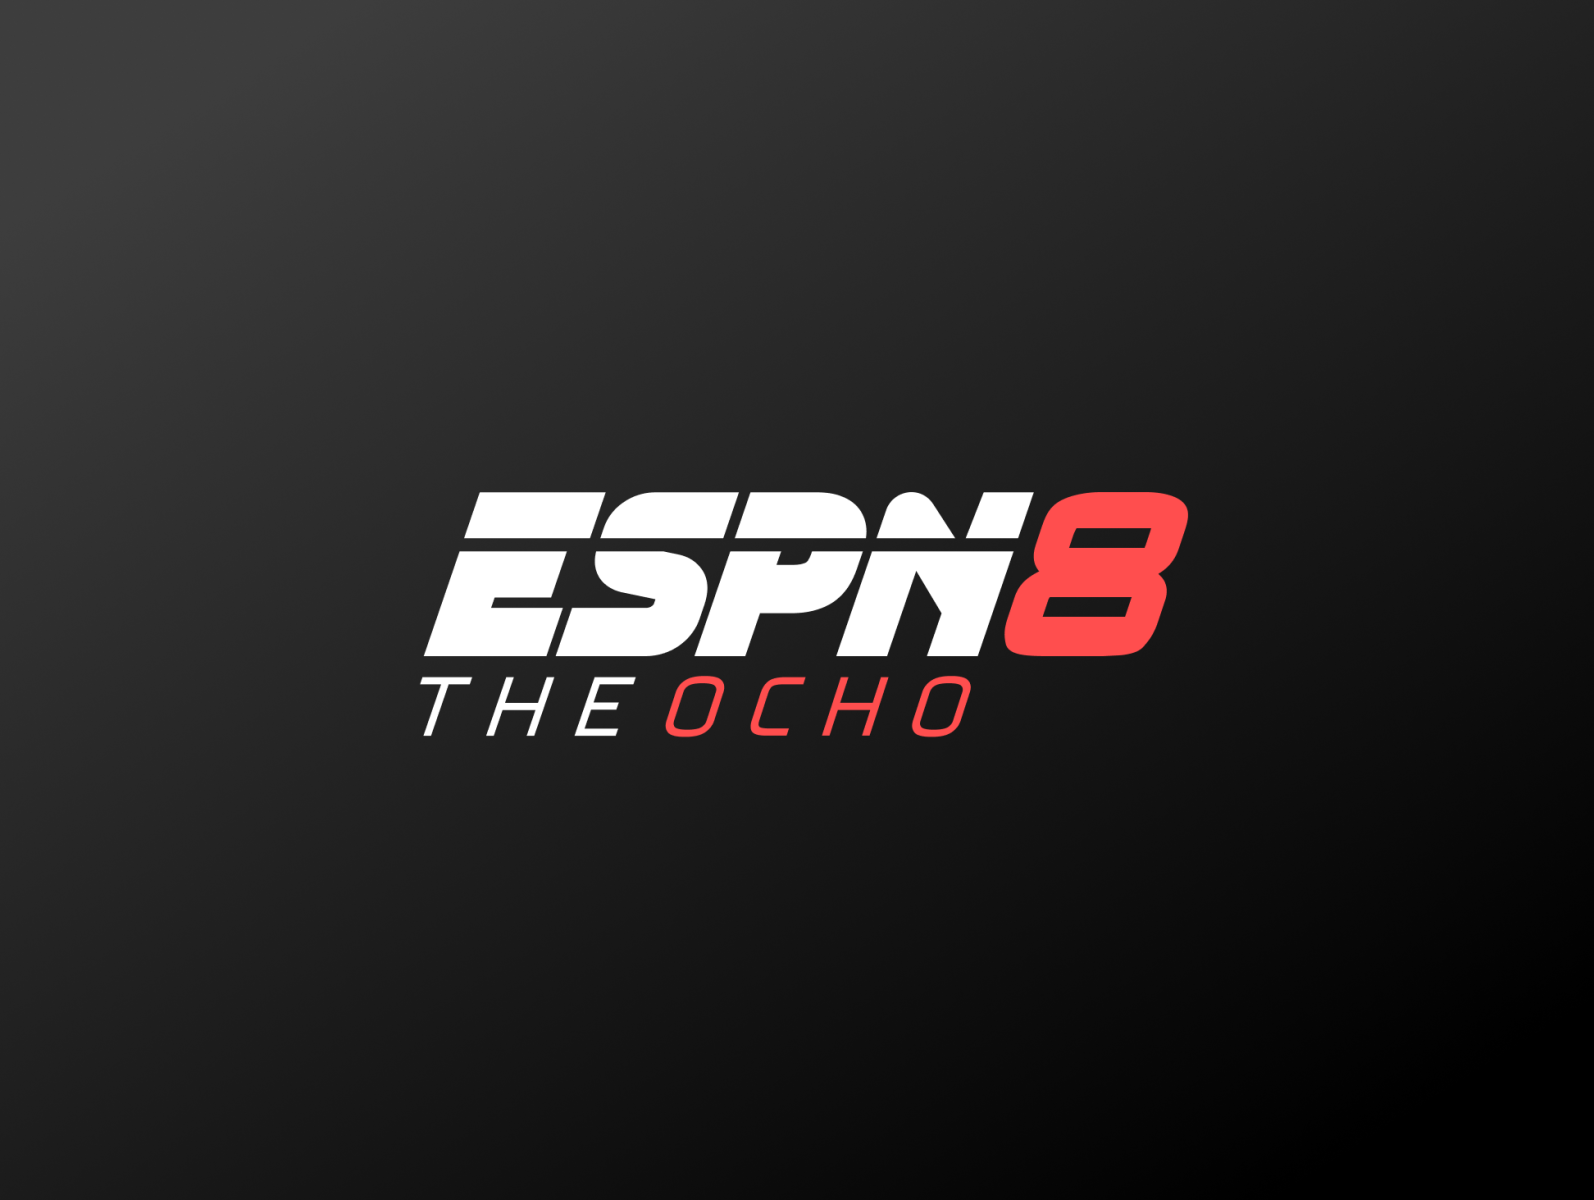 ESPN 8 The Ocho by Craig Melville on Dribbble